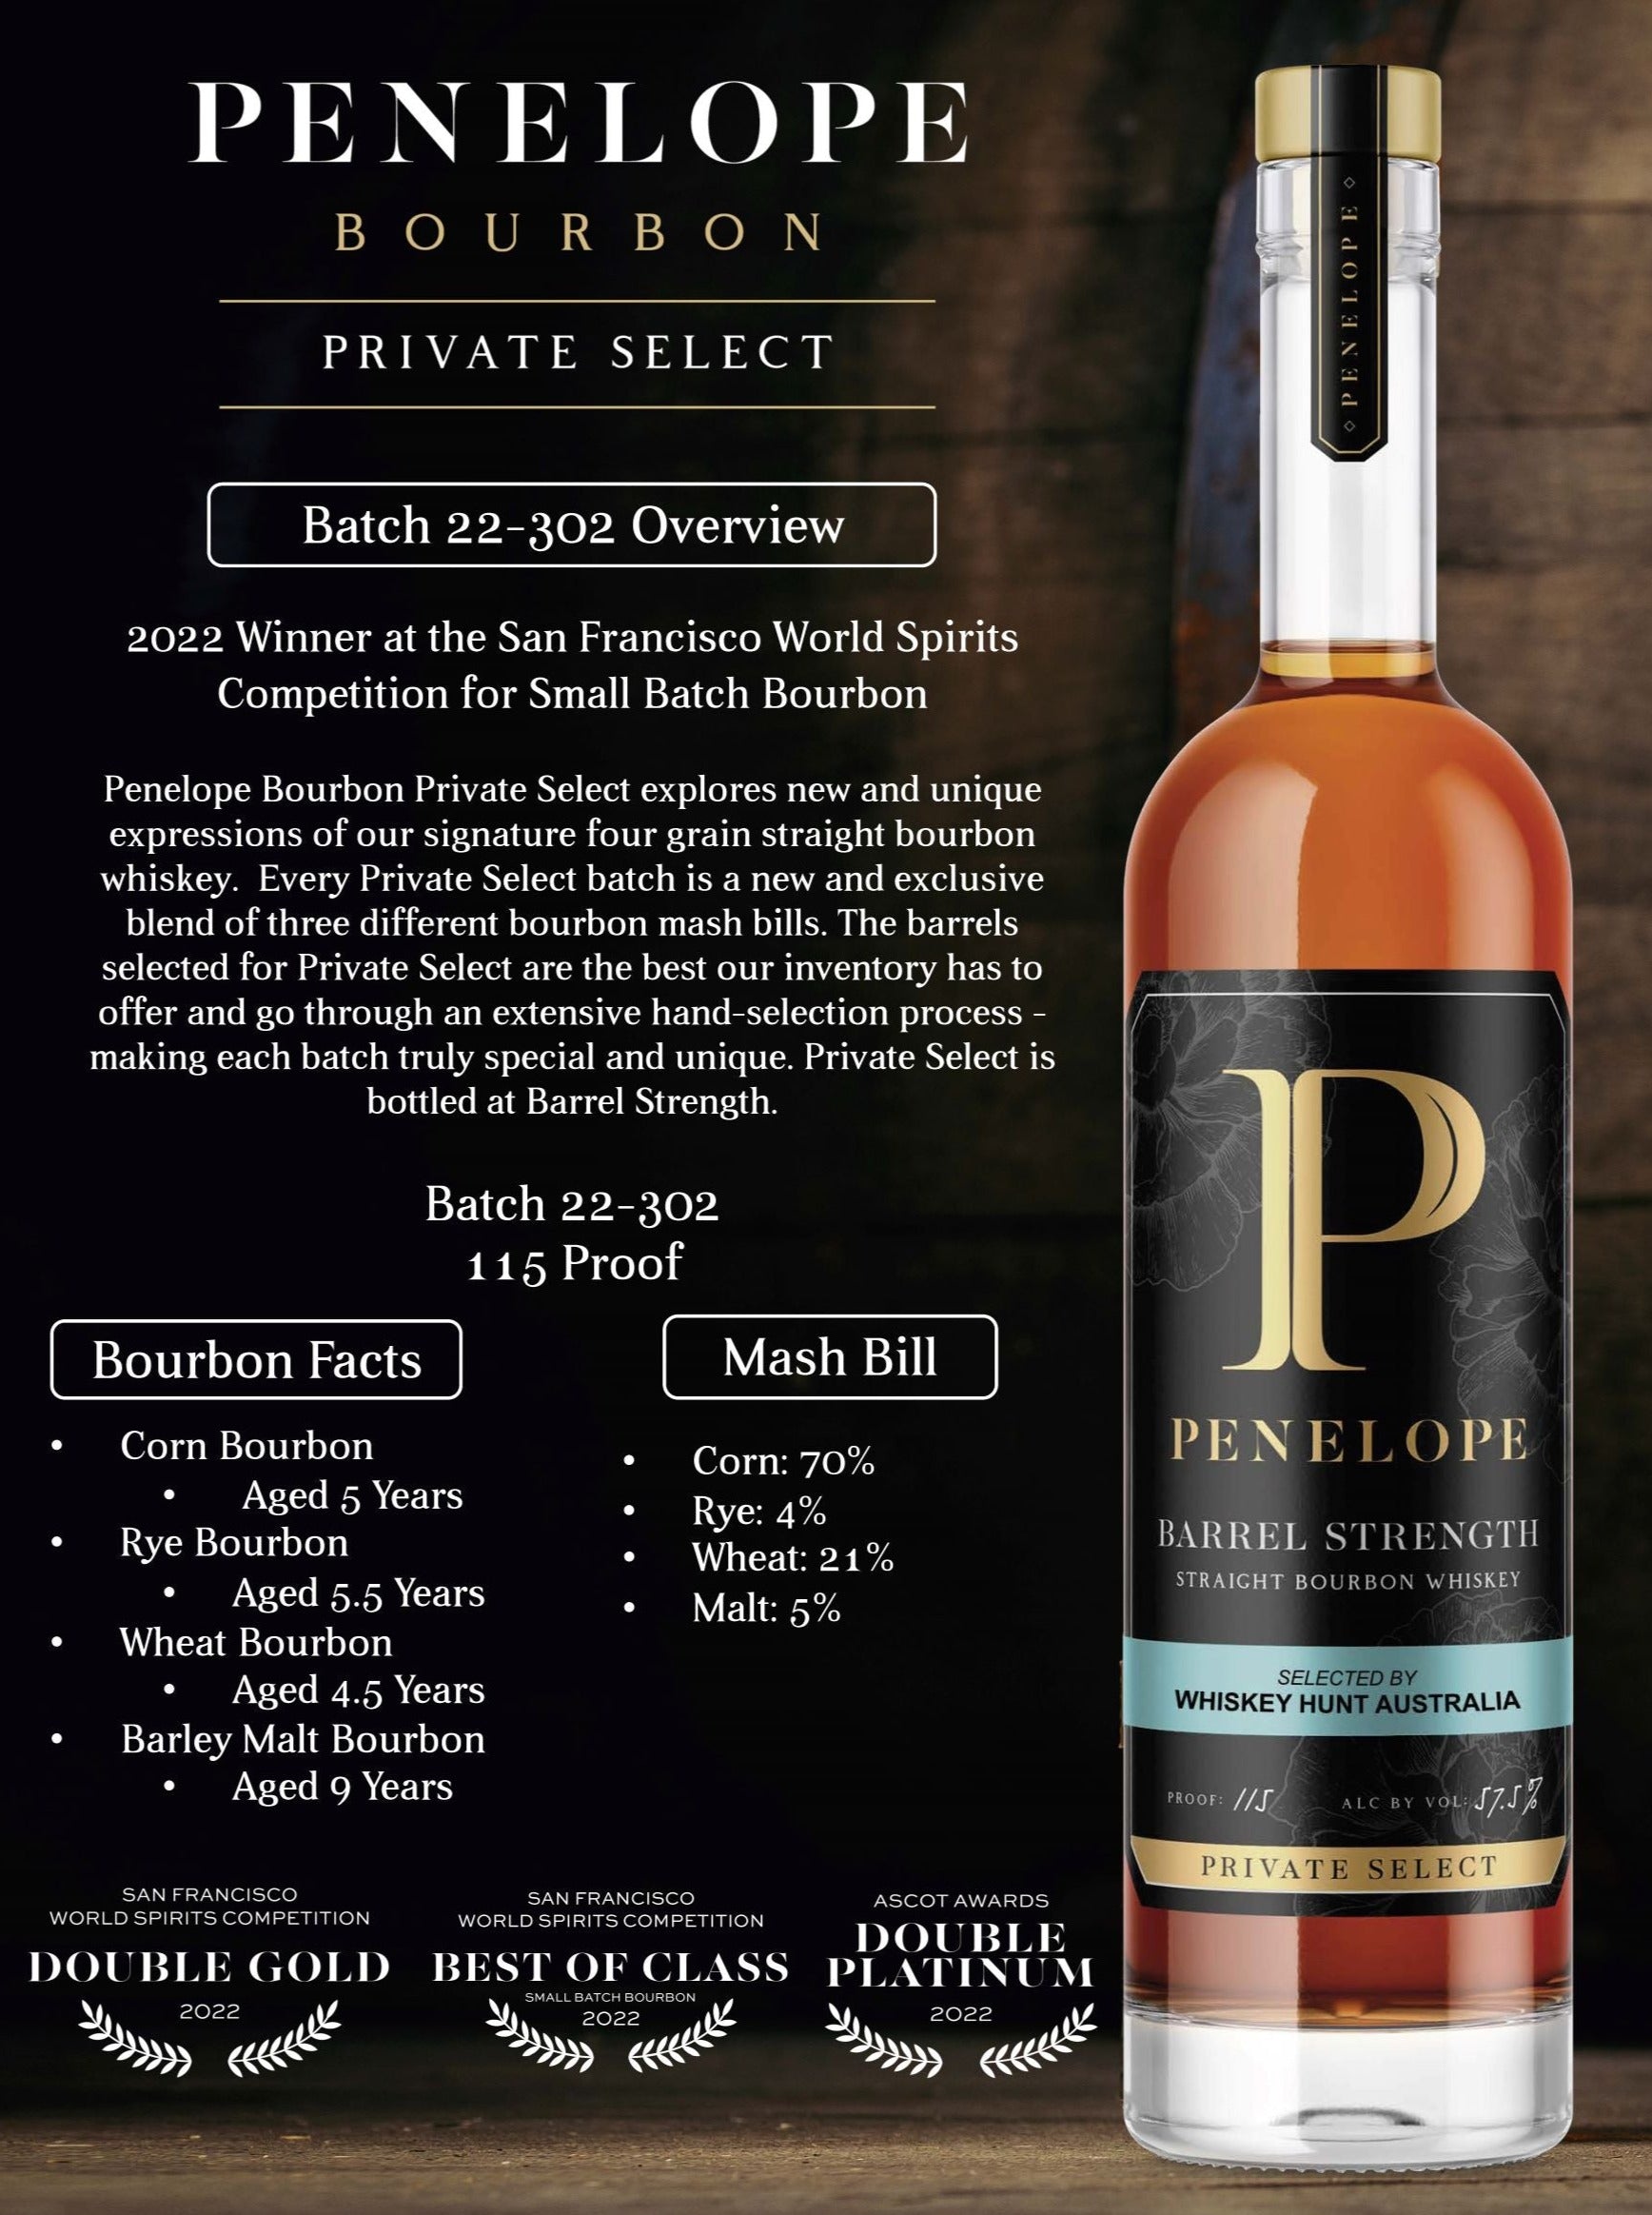 Penelope Private Select Bourbon - Whiskey Hunt Australia 750ml